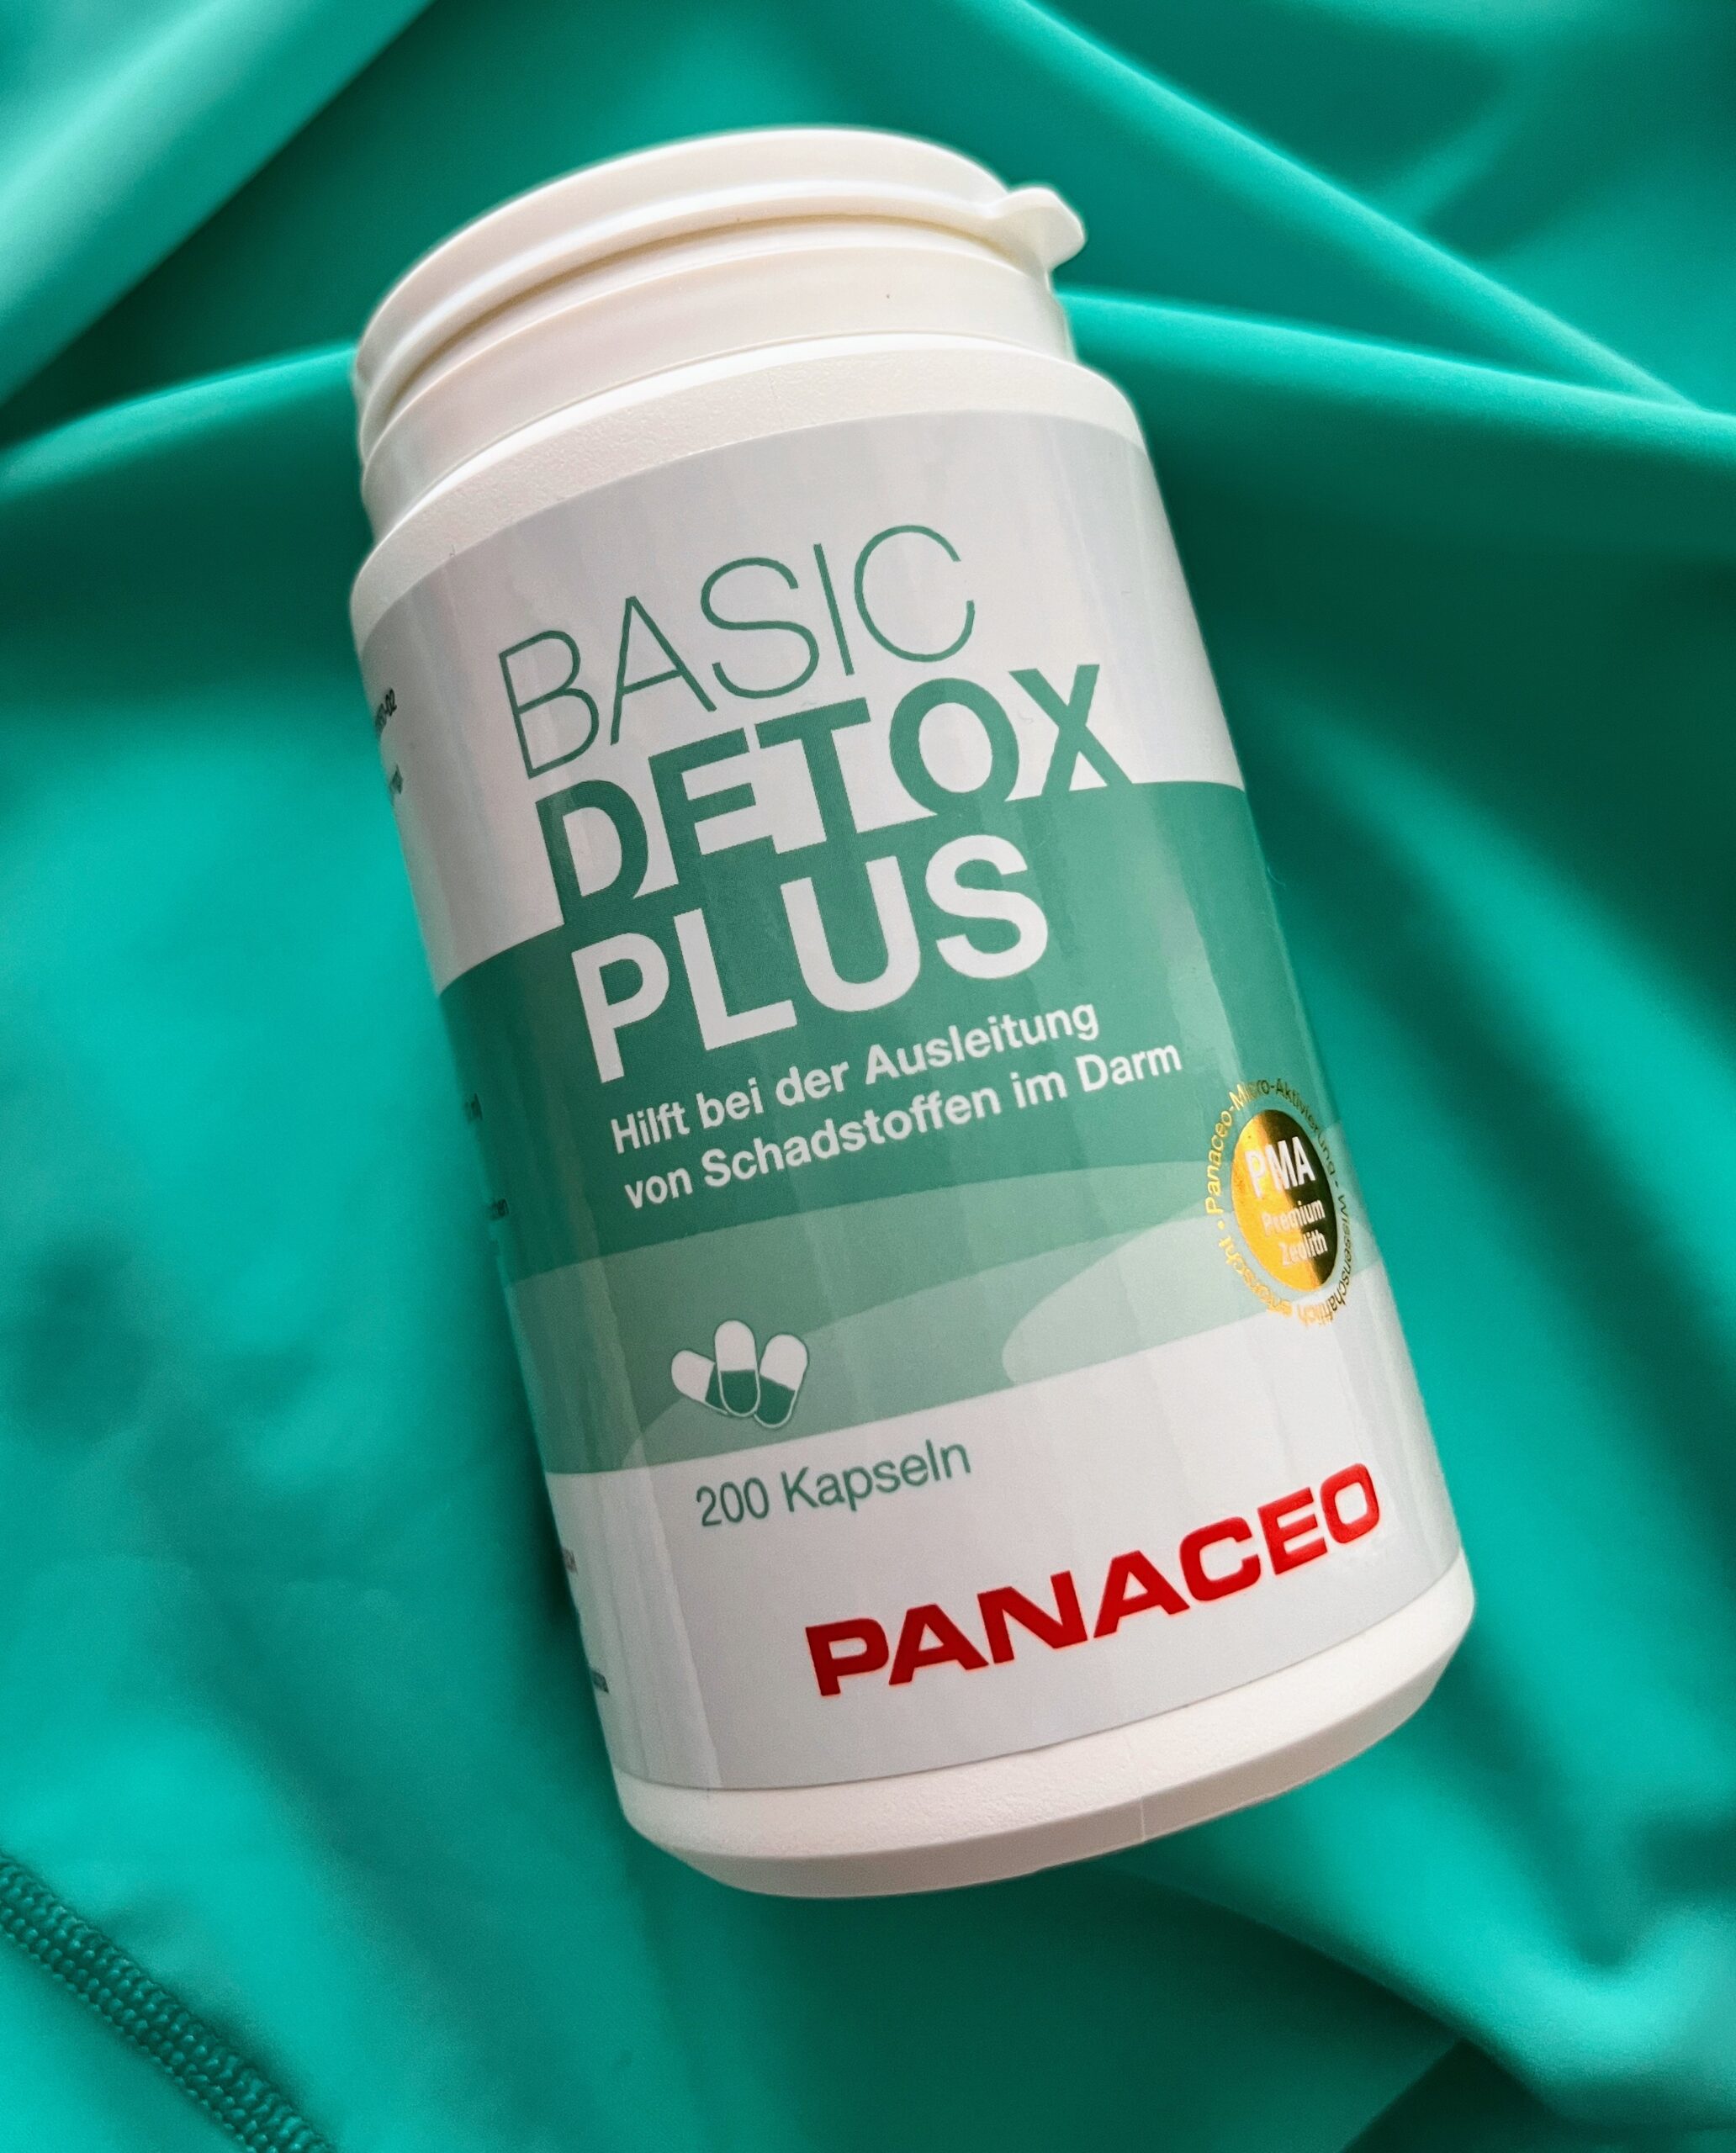 Panaceo Basic Detox Plus Kapseln